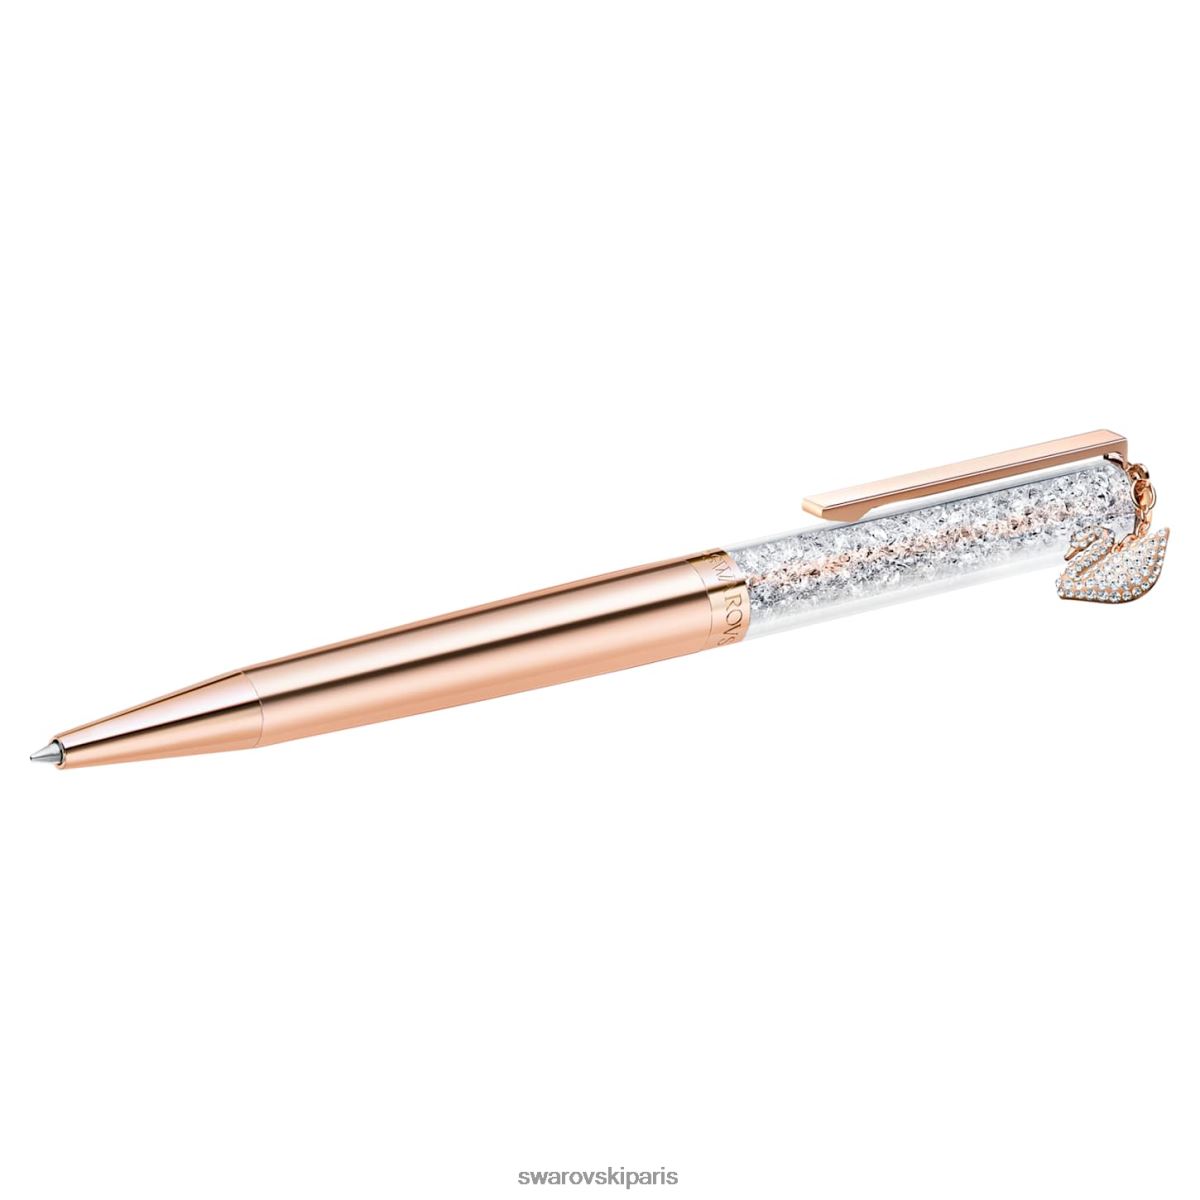 accessoires Swarovski stylo à bille cristallin cygne, ton or rose, plaqué ton or rose RZD0XJ1277